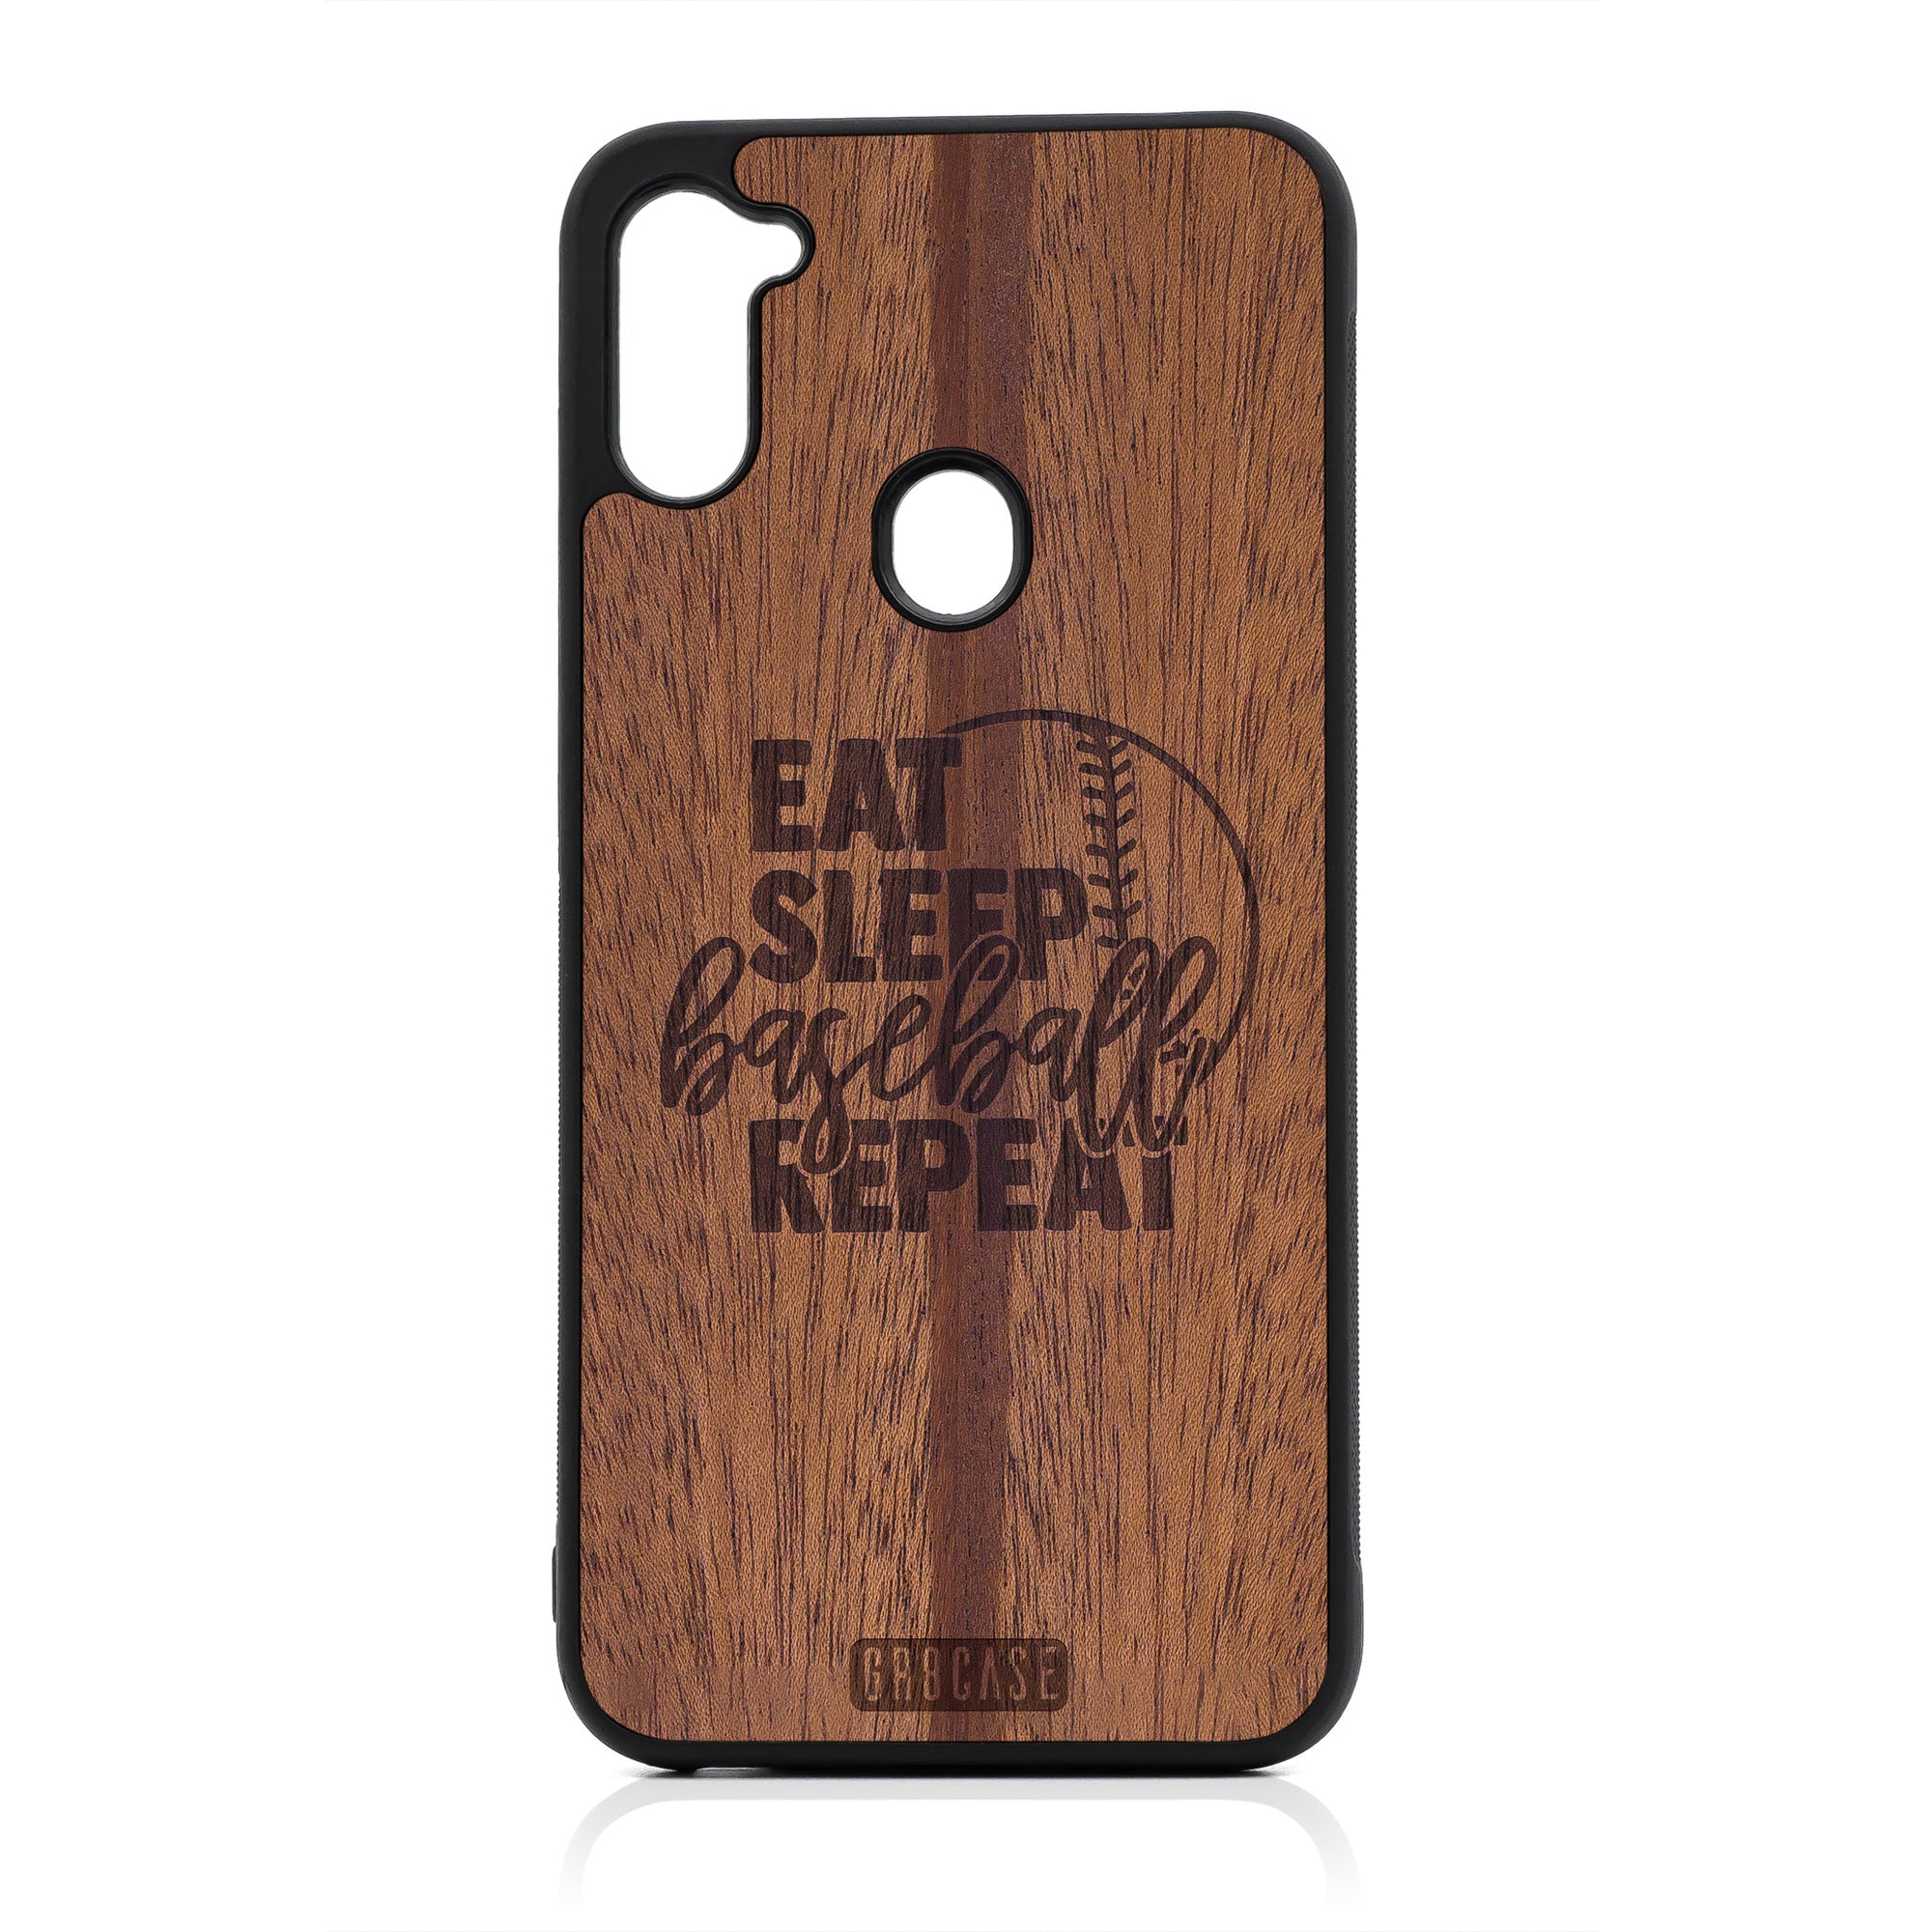 Eat Sleep Baseball Repeat Design Wood Case For Samsung Galaxy A11